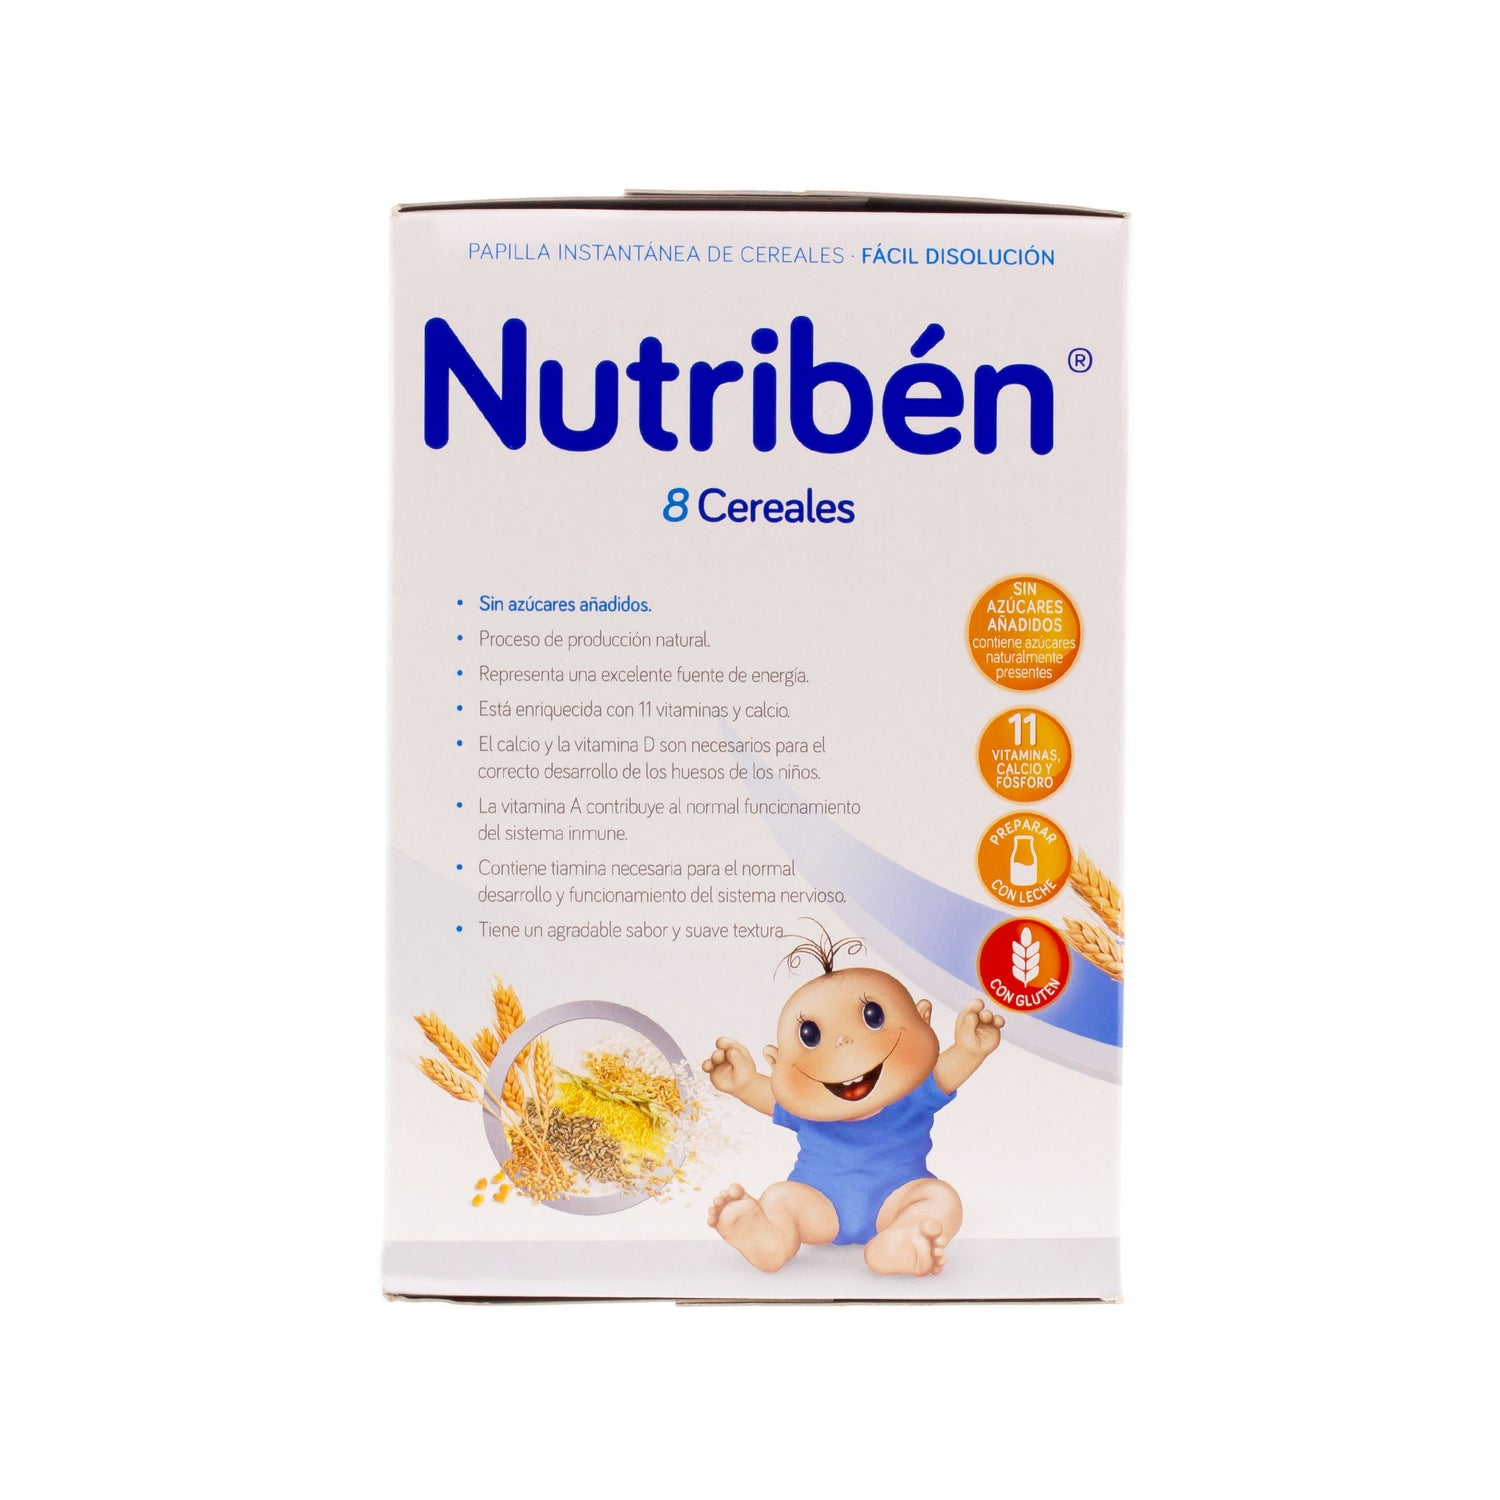 Nutribén® 8 cereals 600g